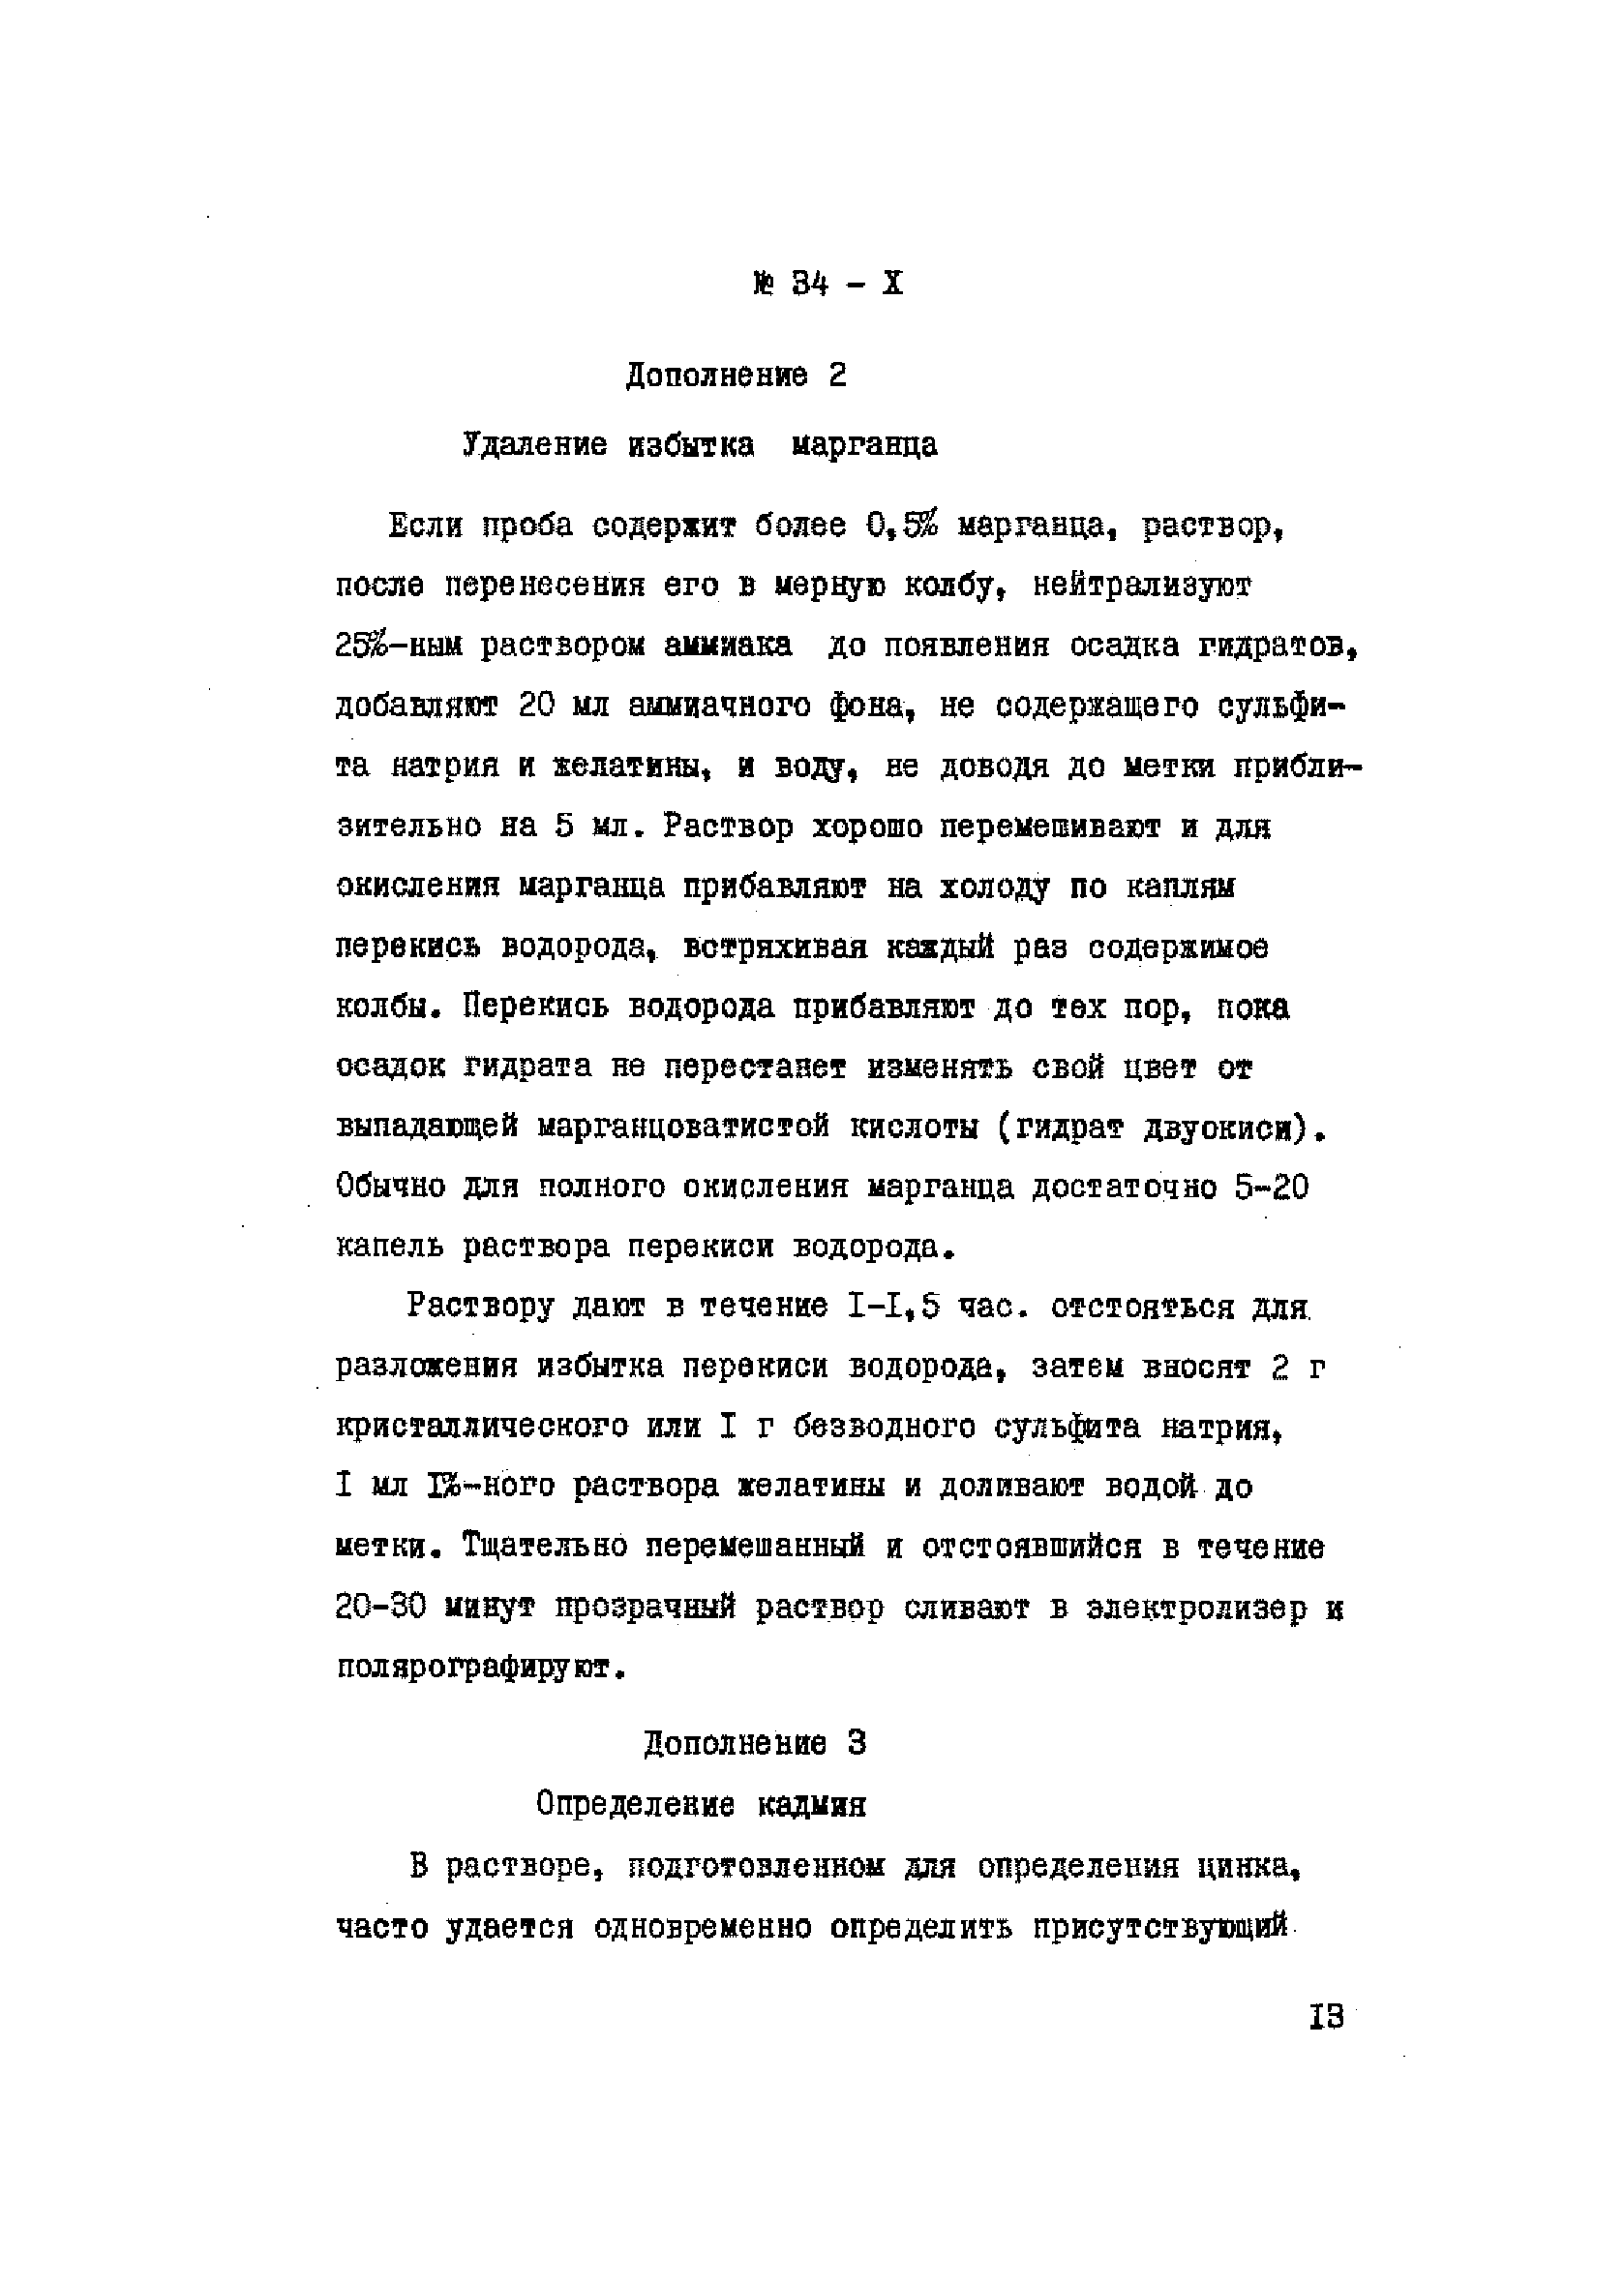 Инструкция НСАМ 34-Х